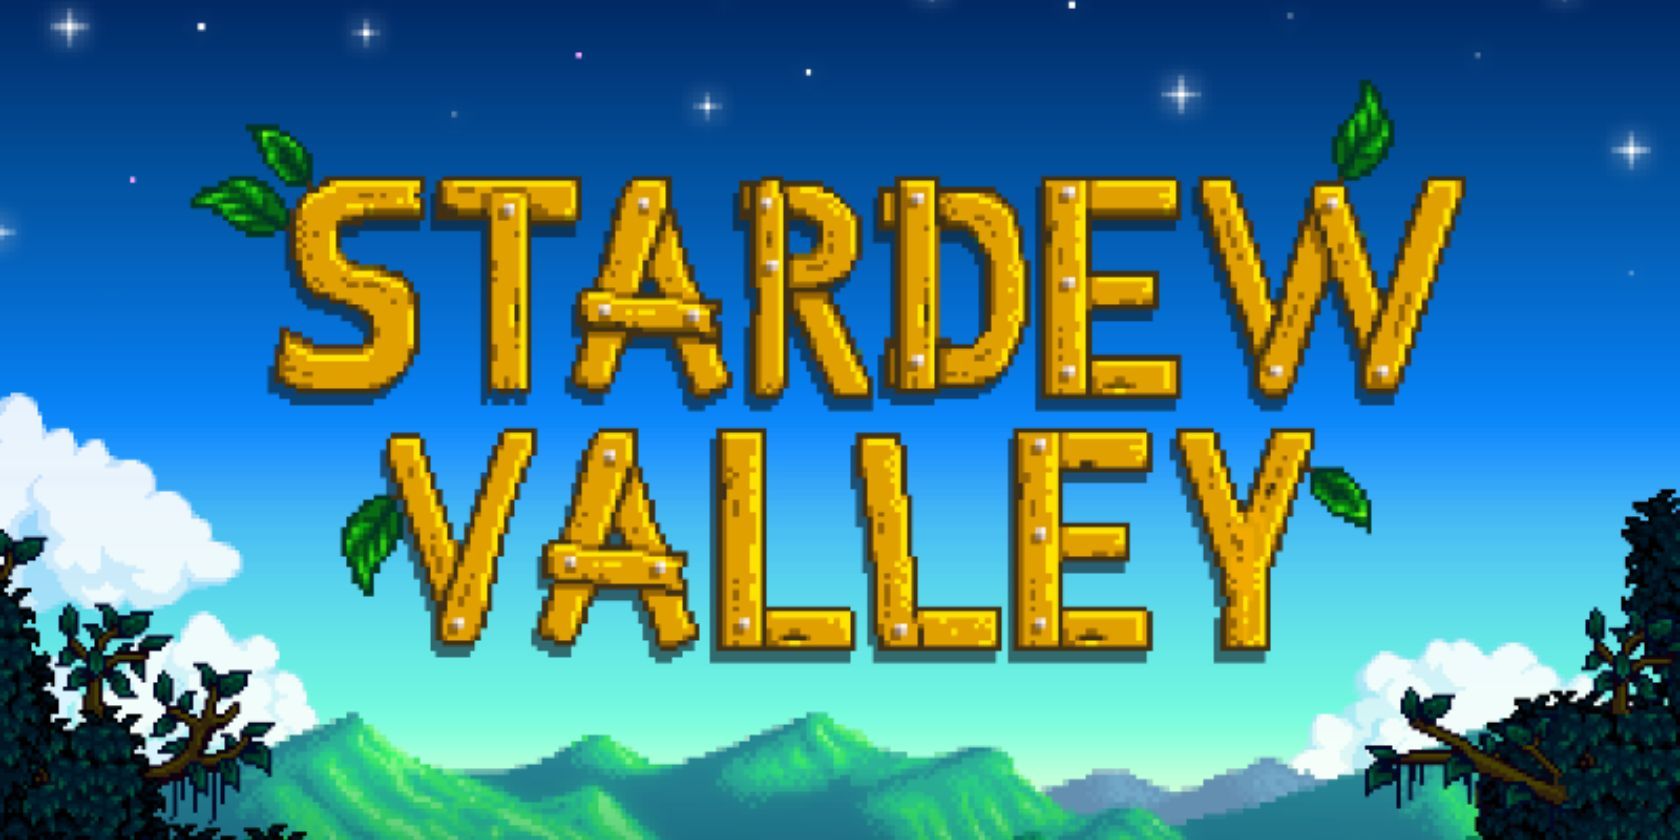 Stardew Valley Video Game